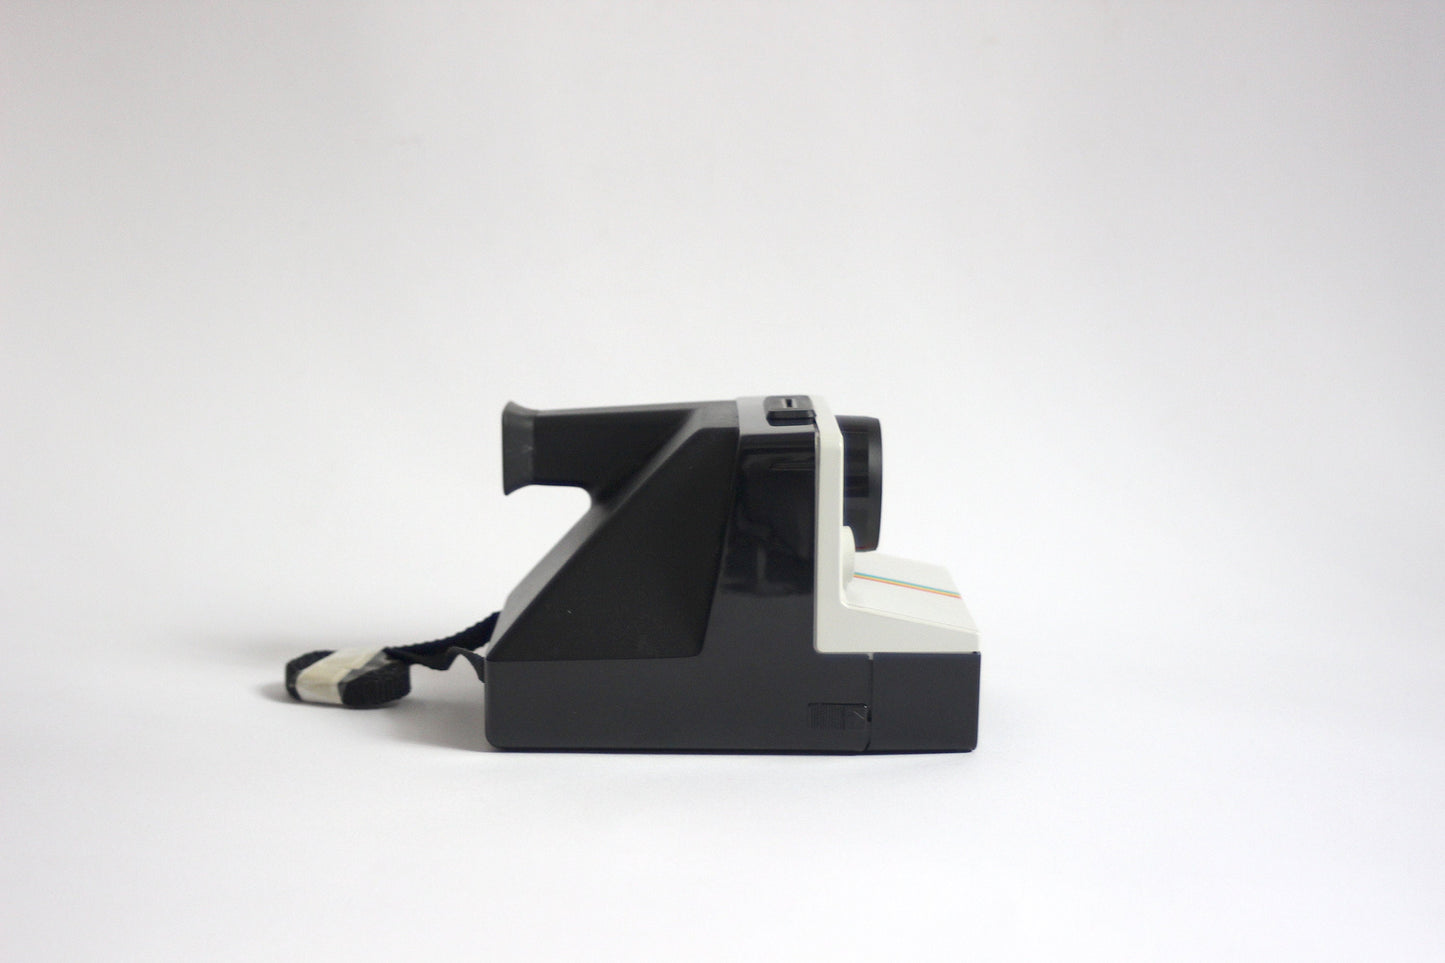 Polaroid 1000 Land Camera - green shutter button